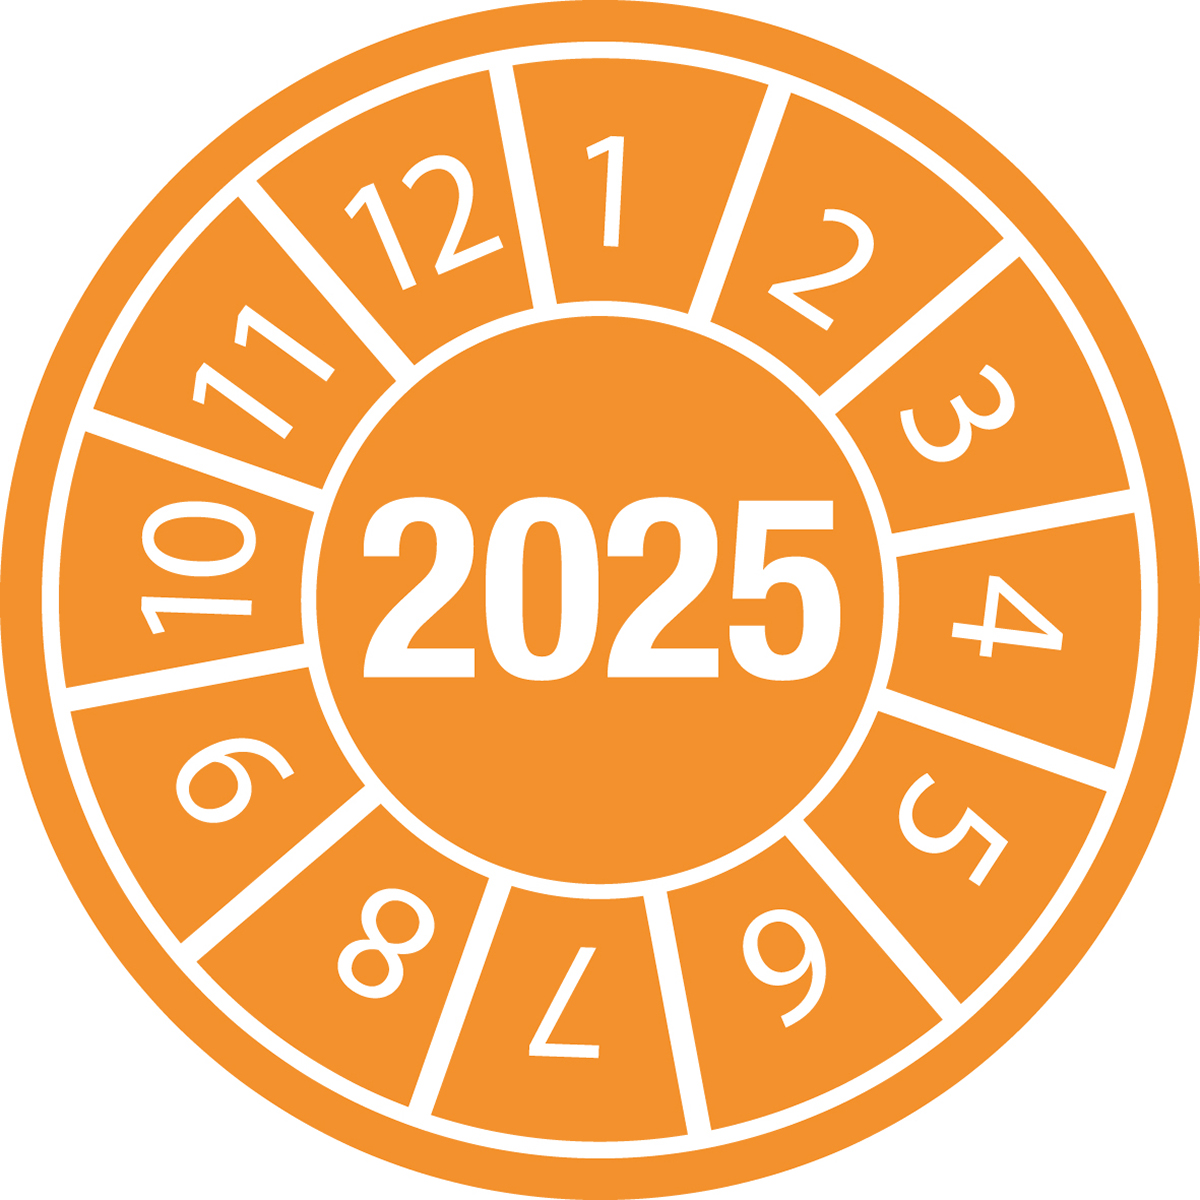 BRADY DATE 2025-DIA 20 B-429 DATE INSPECTION LBLS B-429 2025 - DIA 20 834153